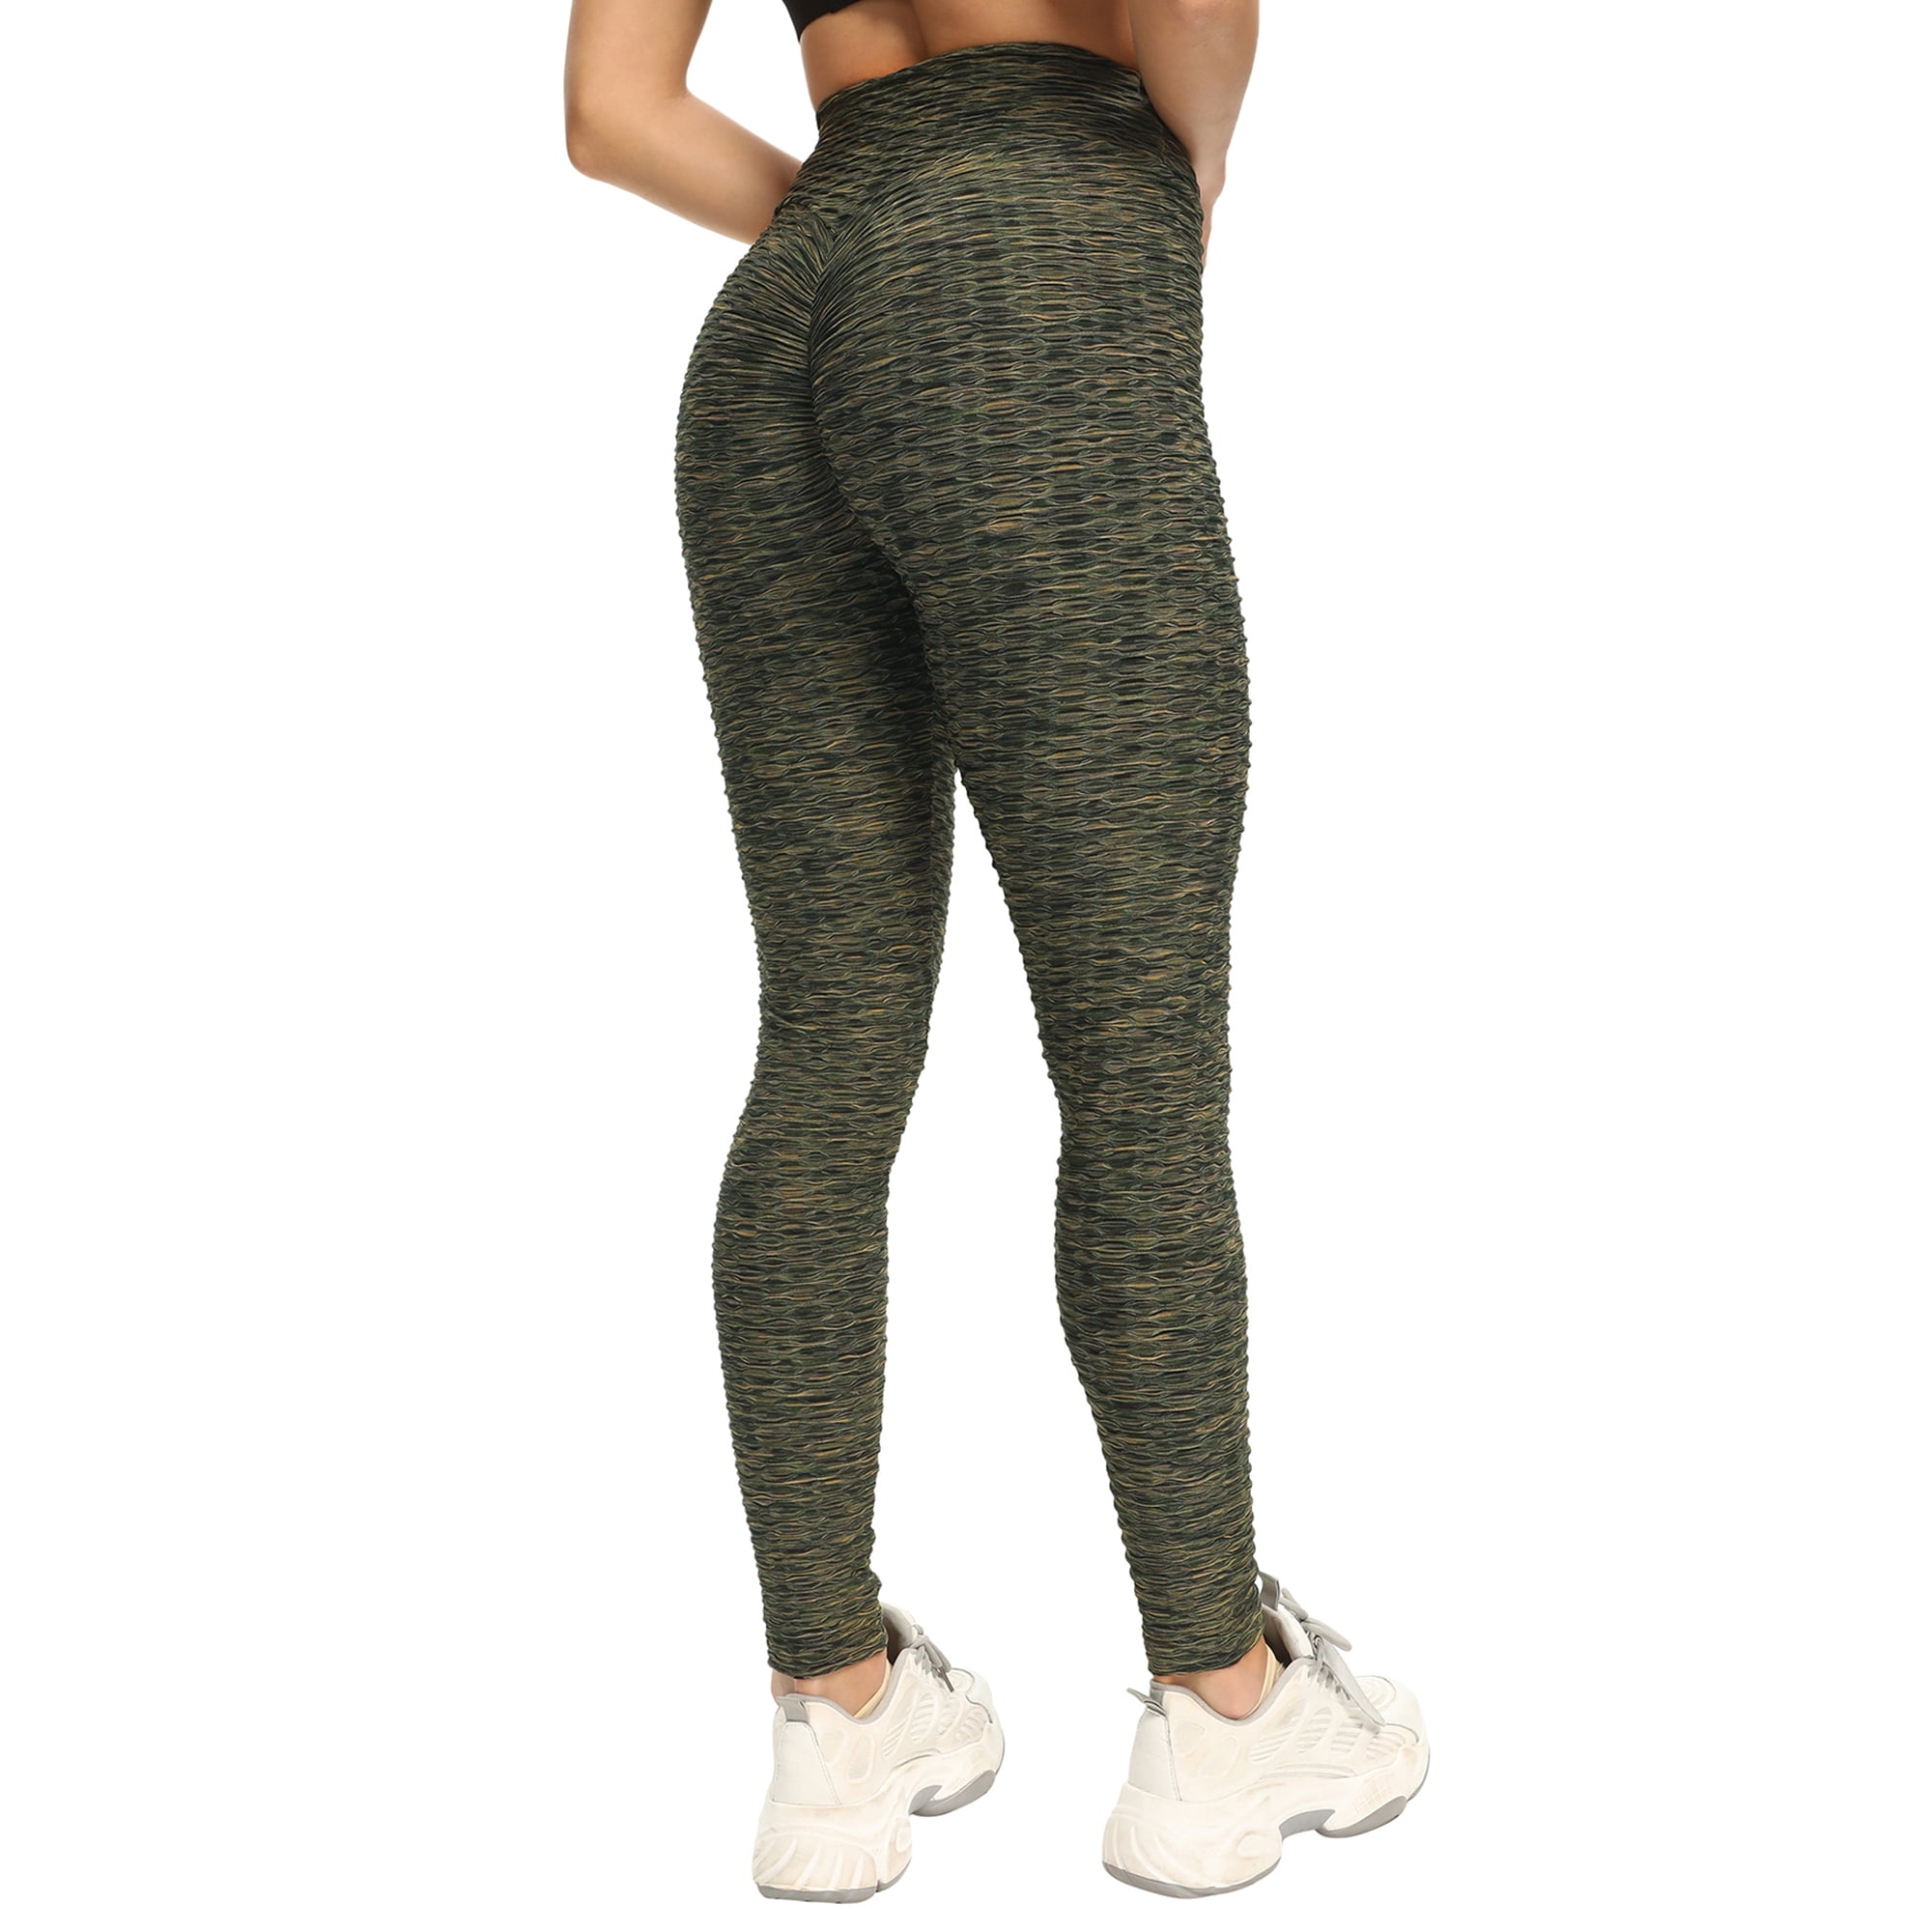 FANNYC Yoga Pants For Women's High Waist Sports Leggings Tummy Control  Pilates External Wear Gym Exercise Activewear Elastic Belt Tight Loungewear  Sweatpants,S-2XL 